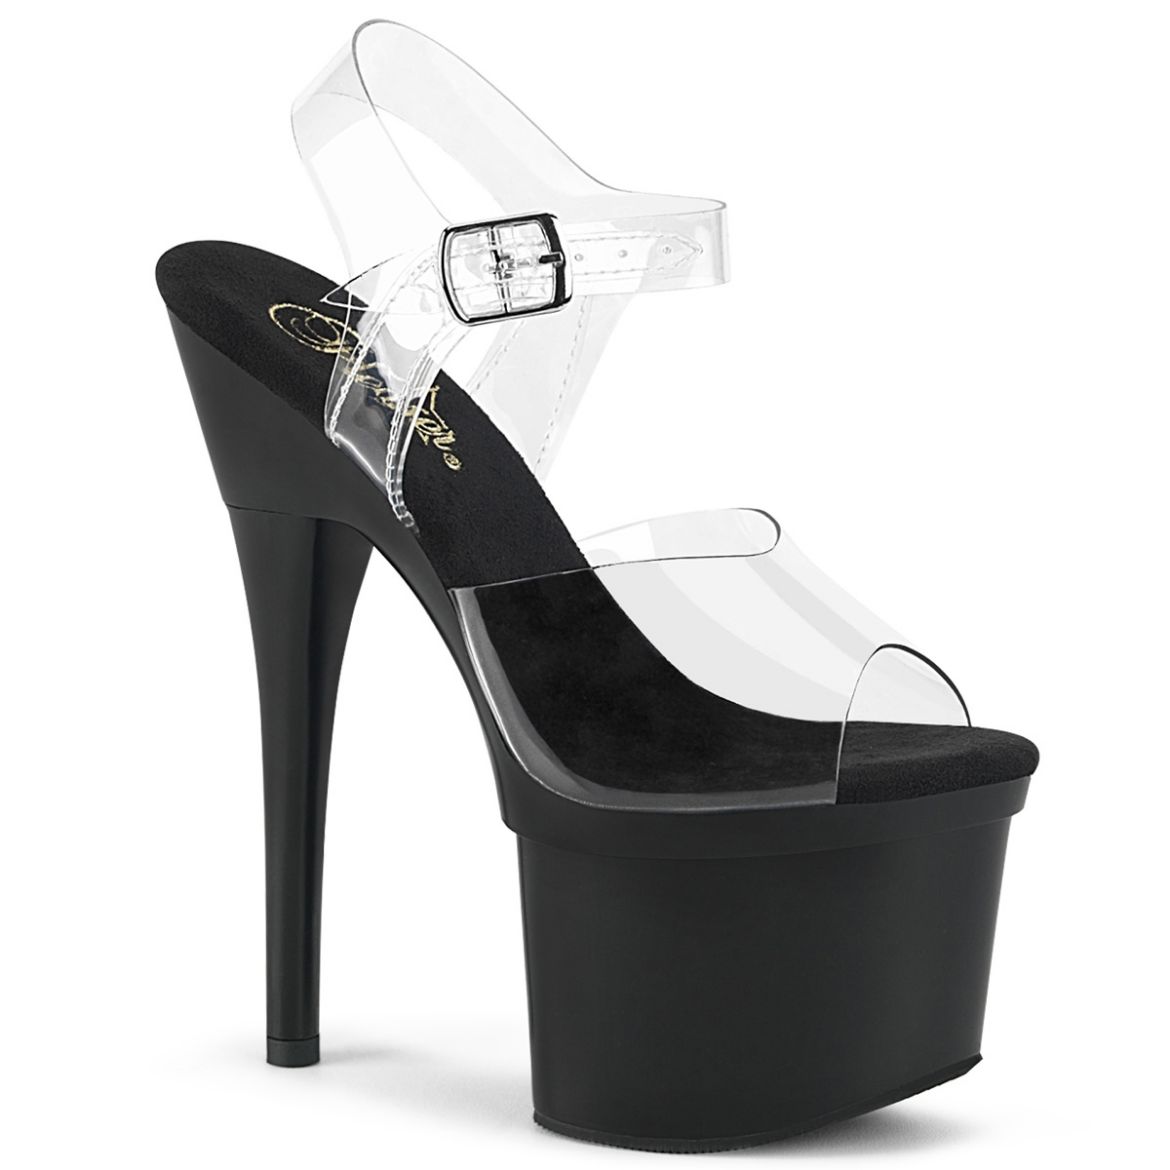 Product image of Pleaser ESTEEM-708 Clear/Black Matte 7 inch (17.8 cm) Heel 3 inch (7.6 cm) Platform Ankle Strap Sandal Shoes